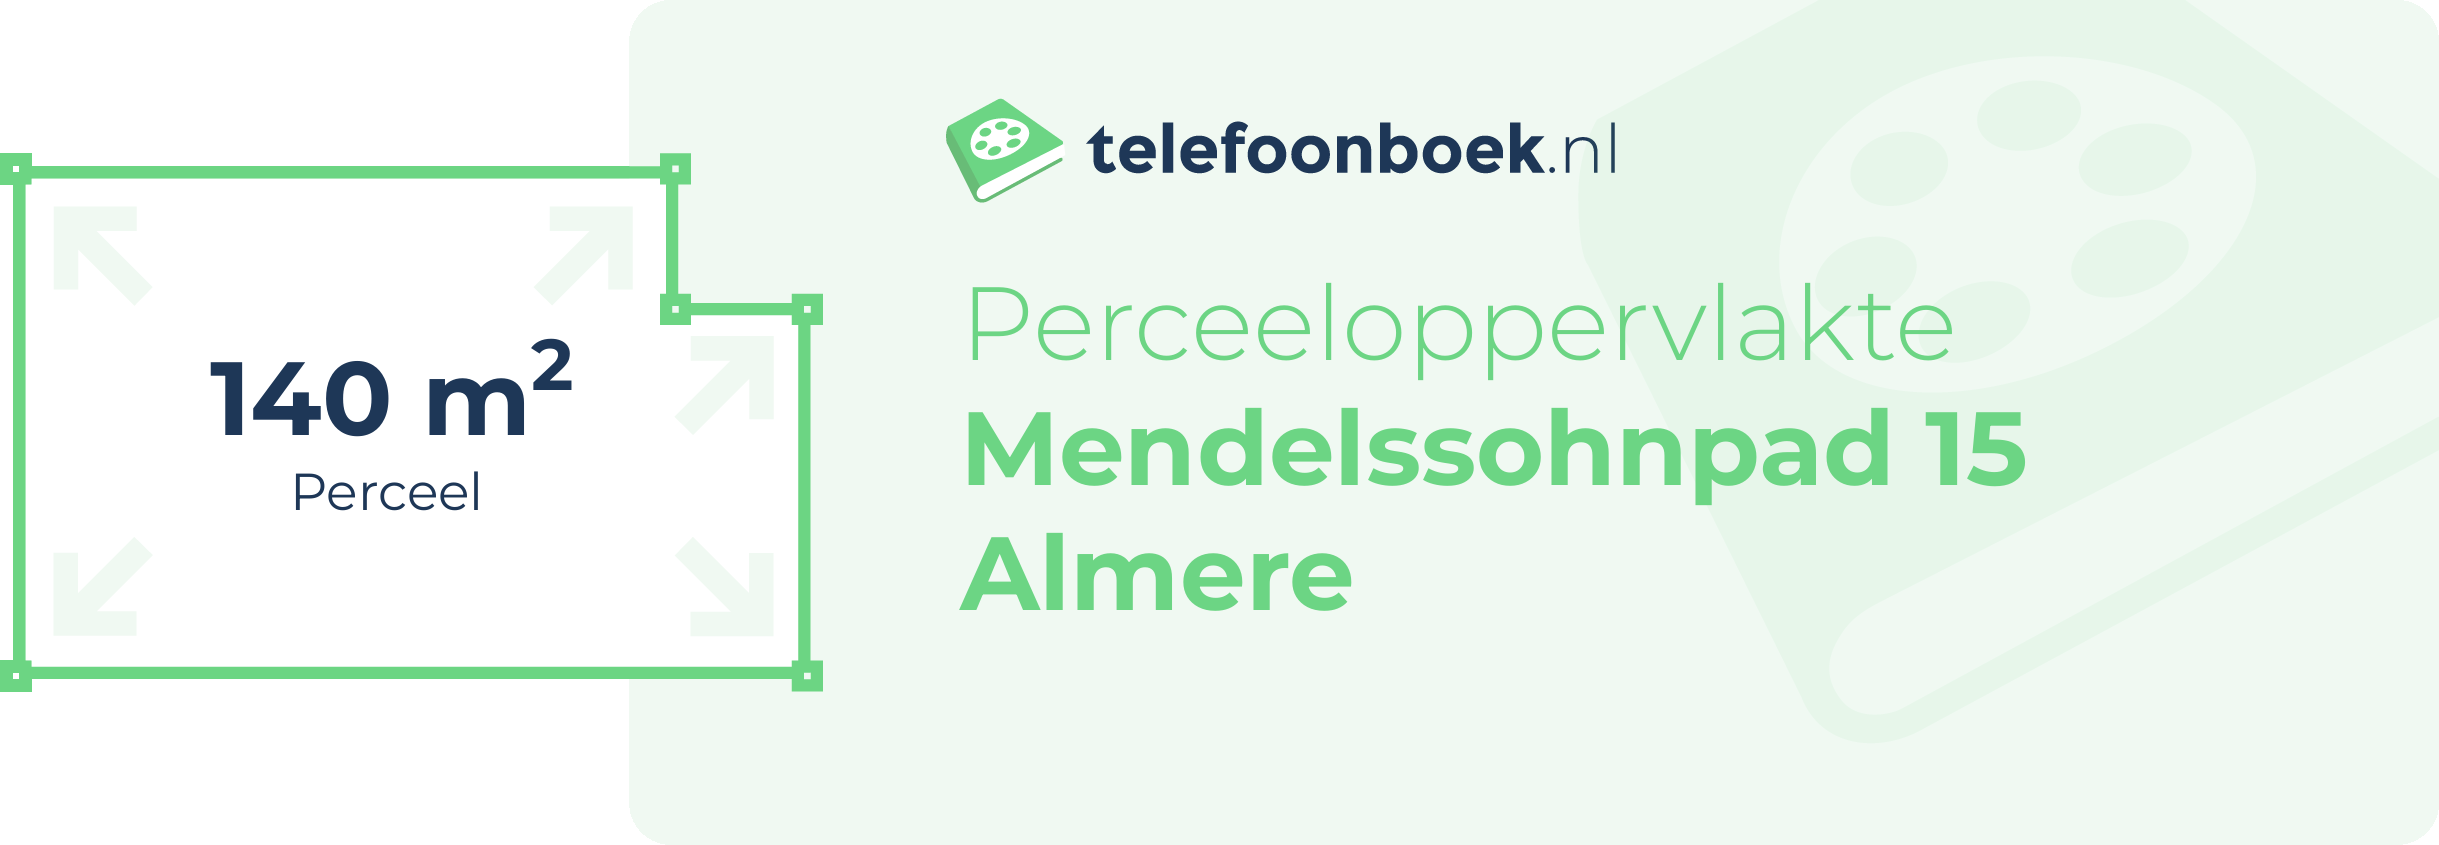 Perceeloppervlakte Mendelssohnpad 15 Almere